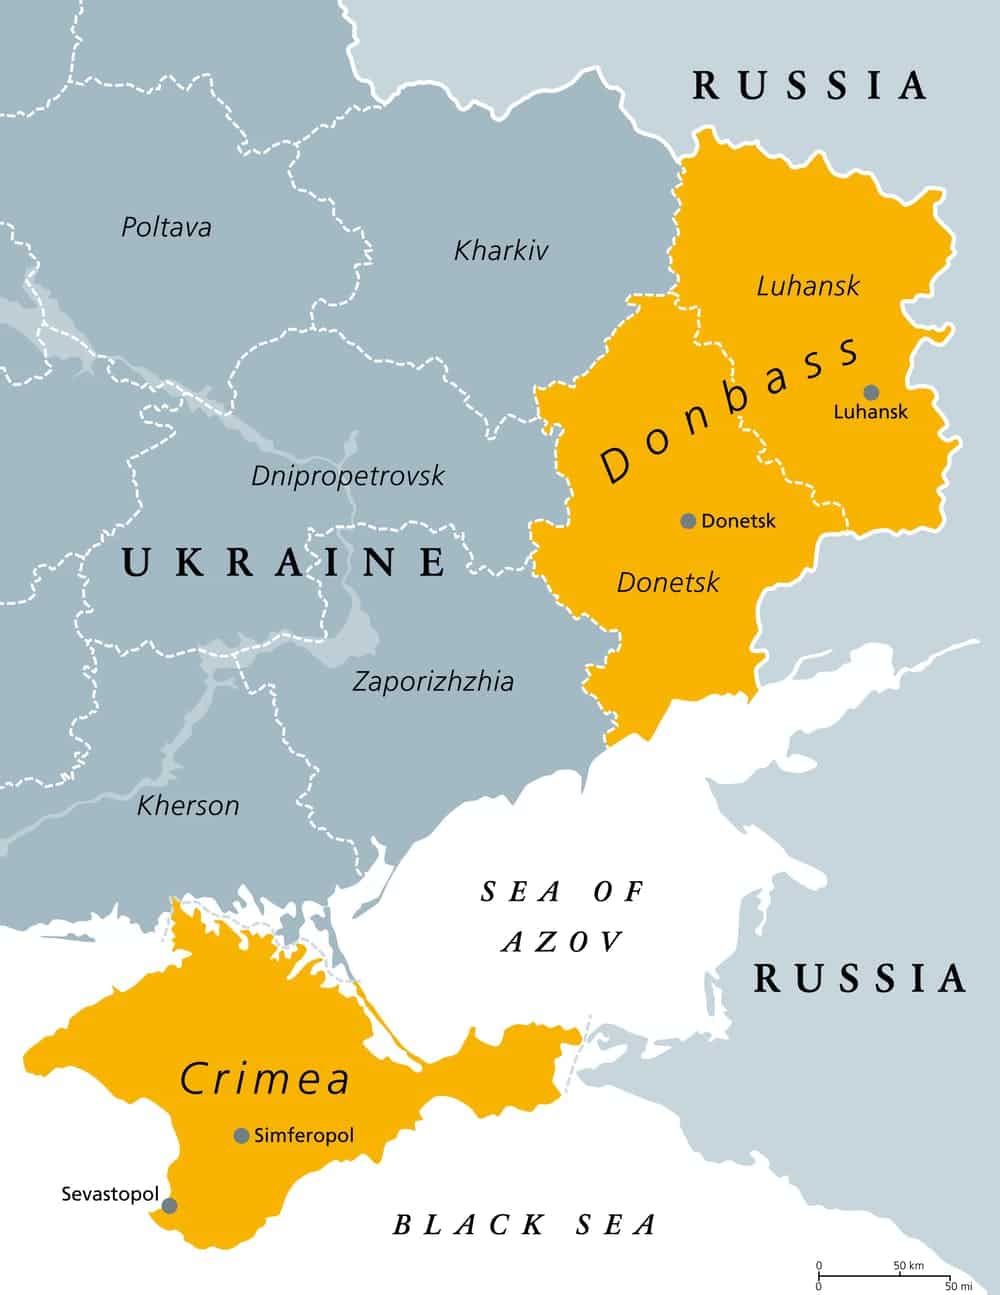 Putin’s Donbas Move Threatens U.S. Global Dominance